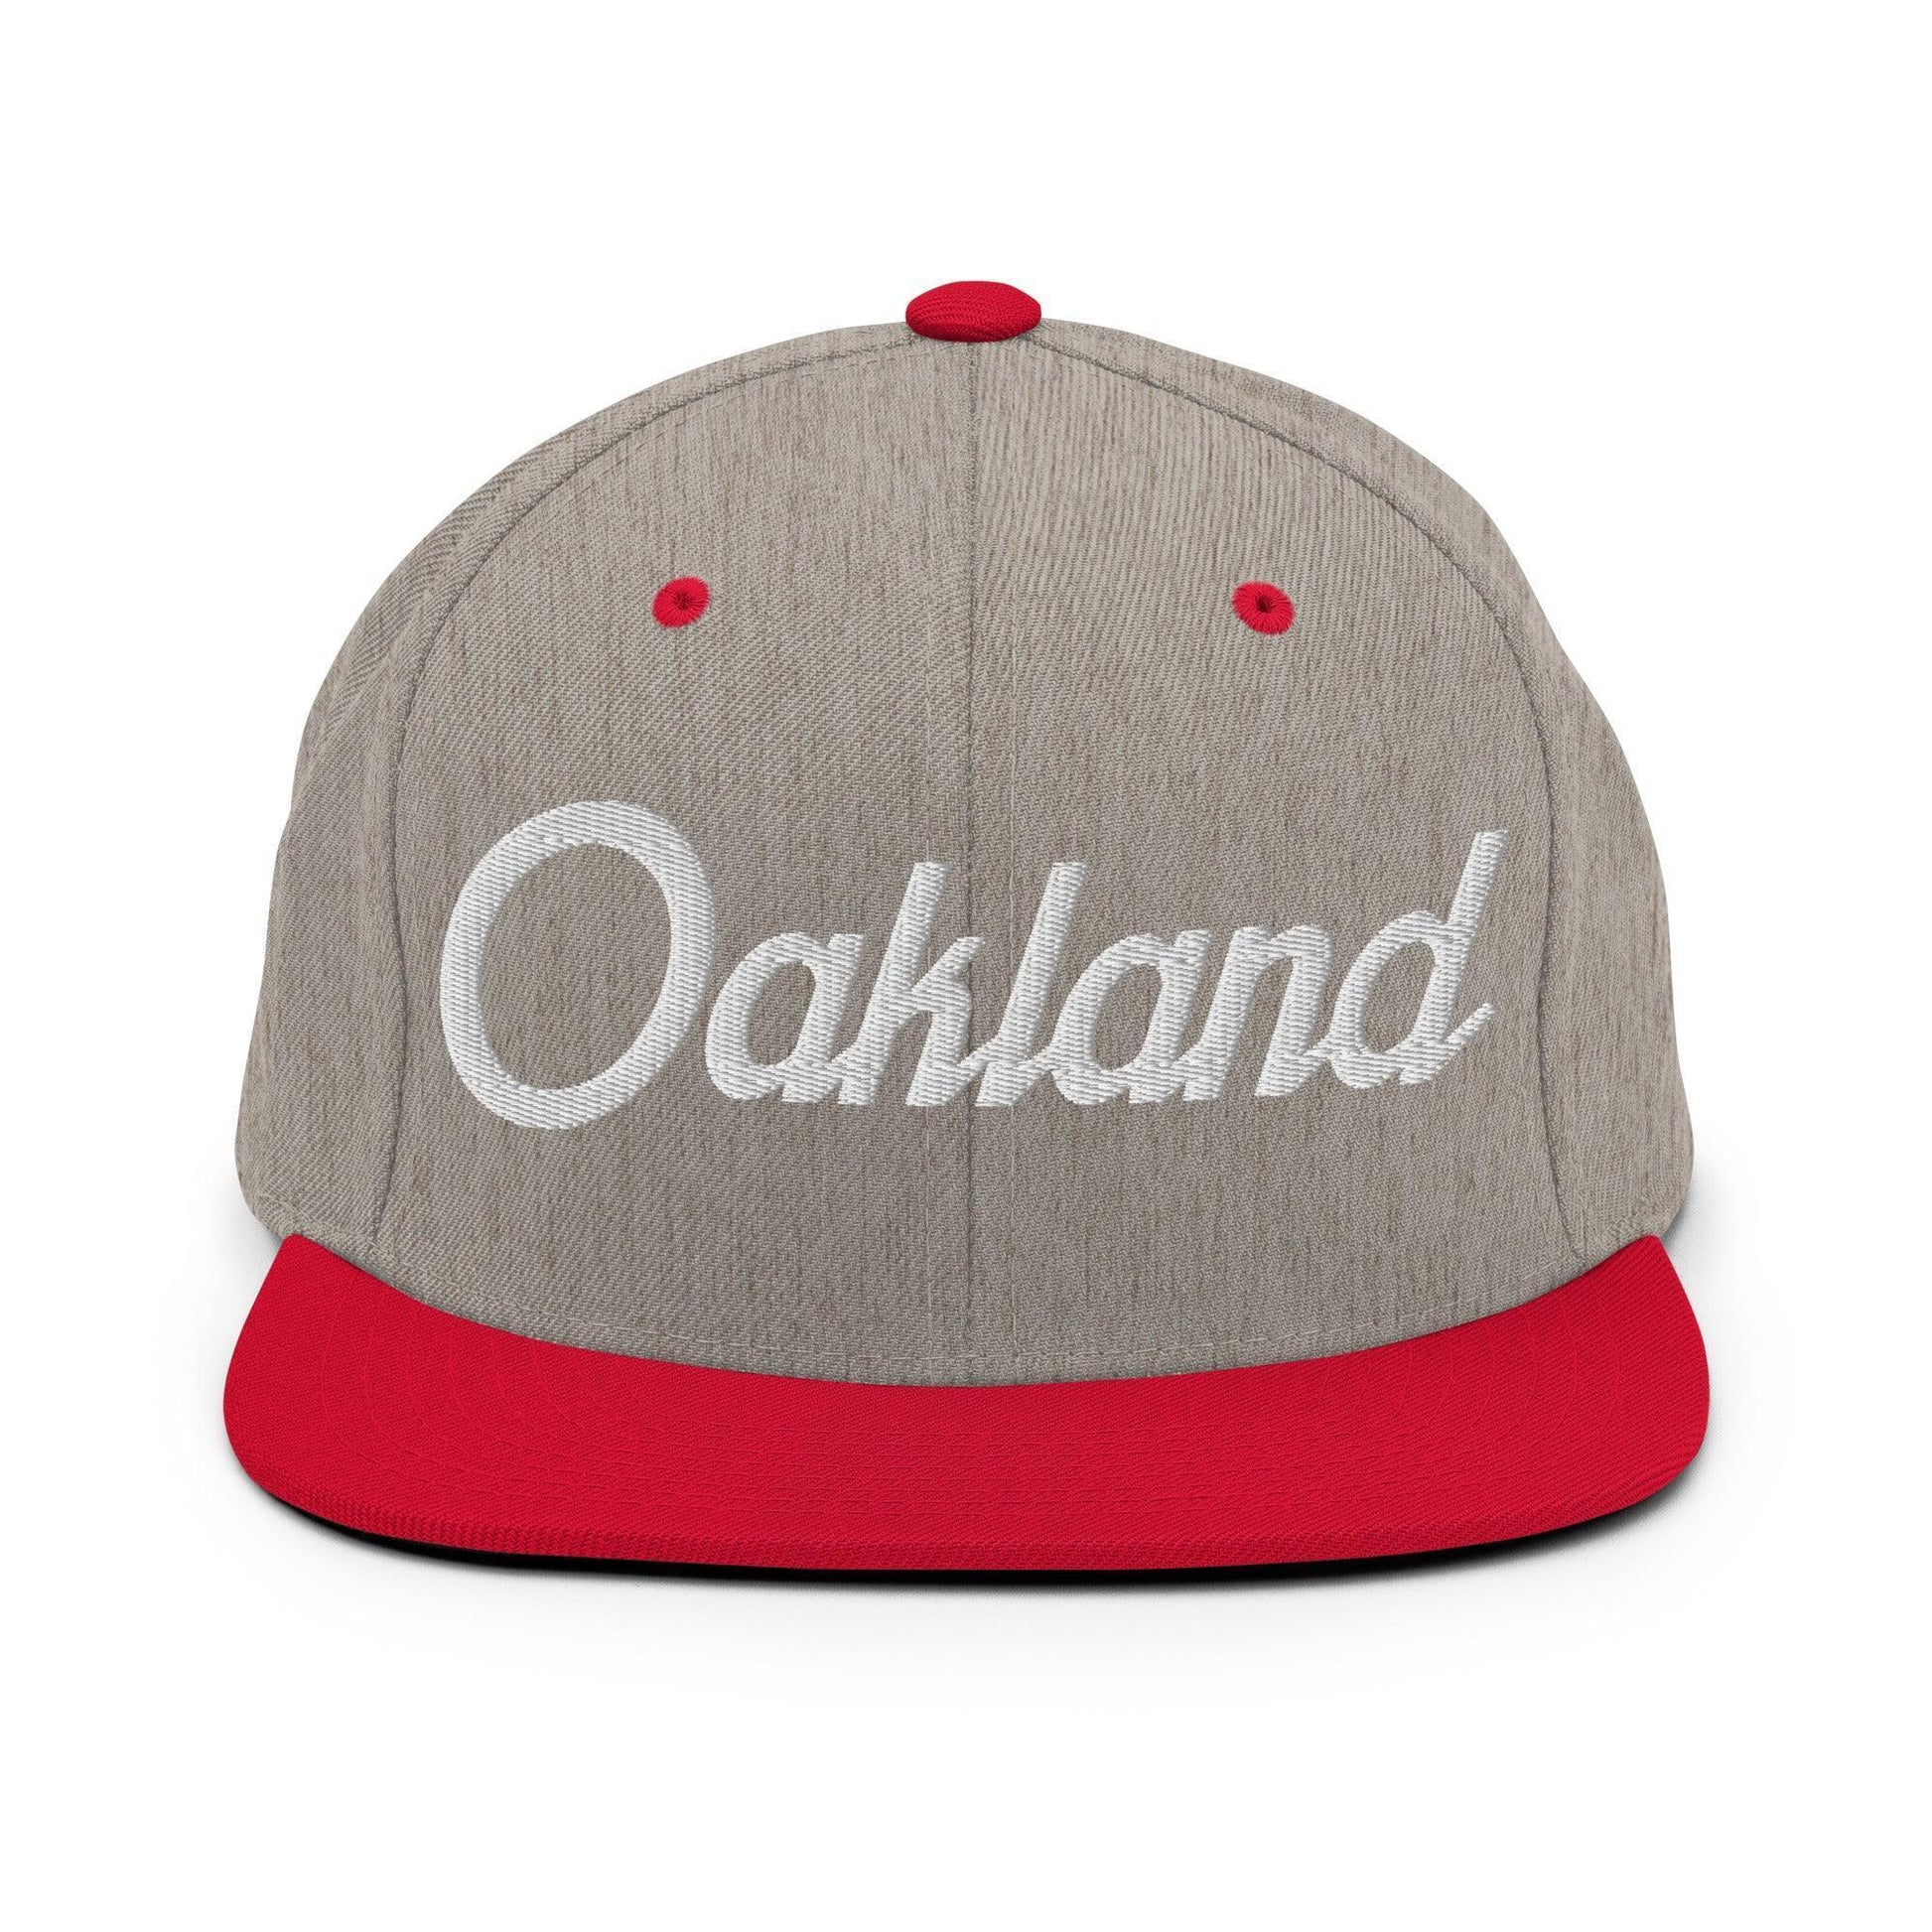 Oakland Script Snapback Hat Heather Grey/ Red